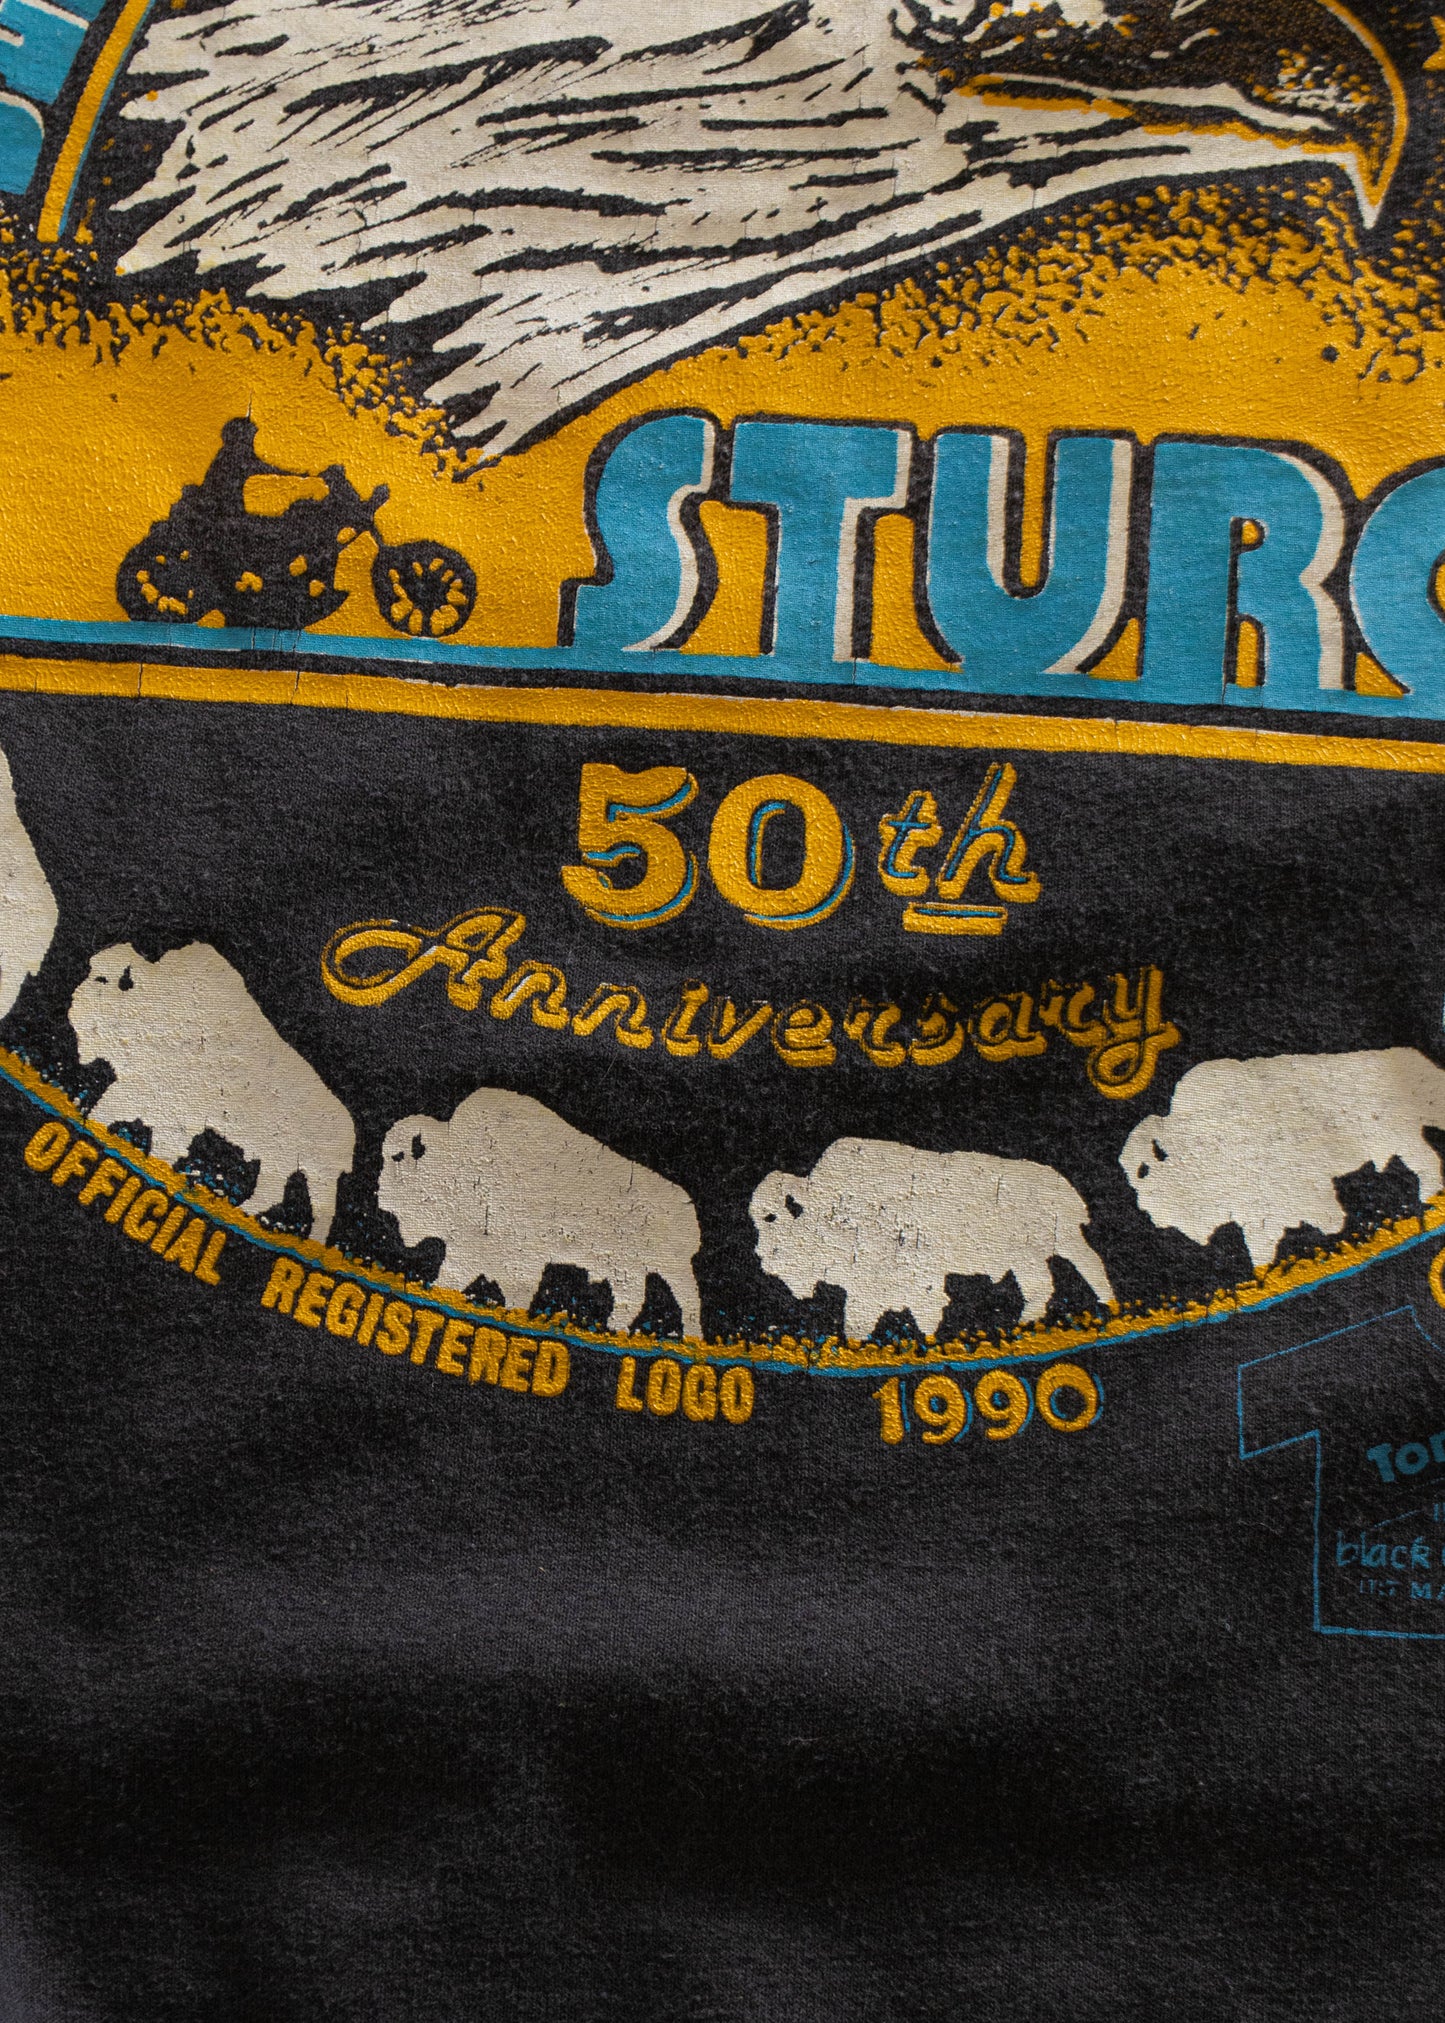 1990s Sturgis Rally 50th Anniversary T-Shirt Size M/L